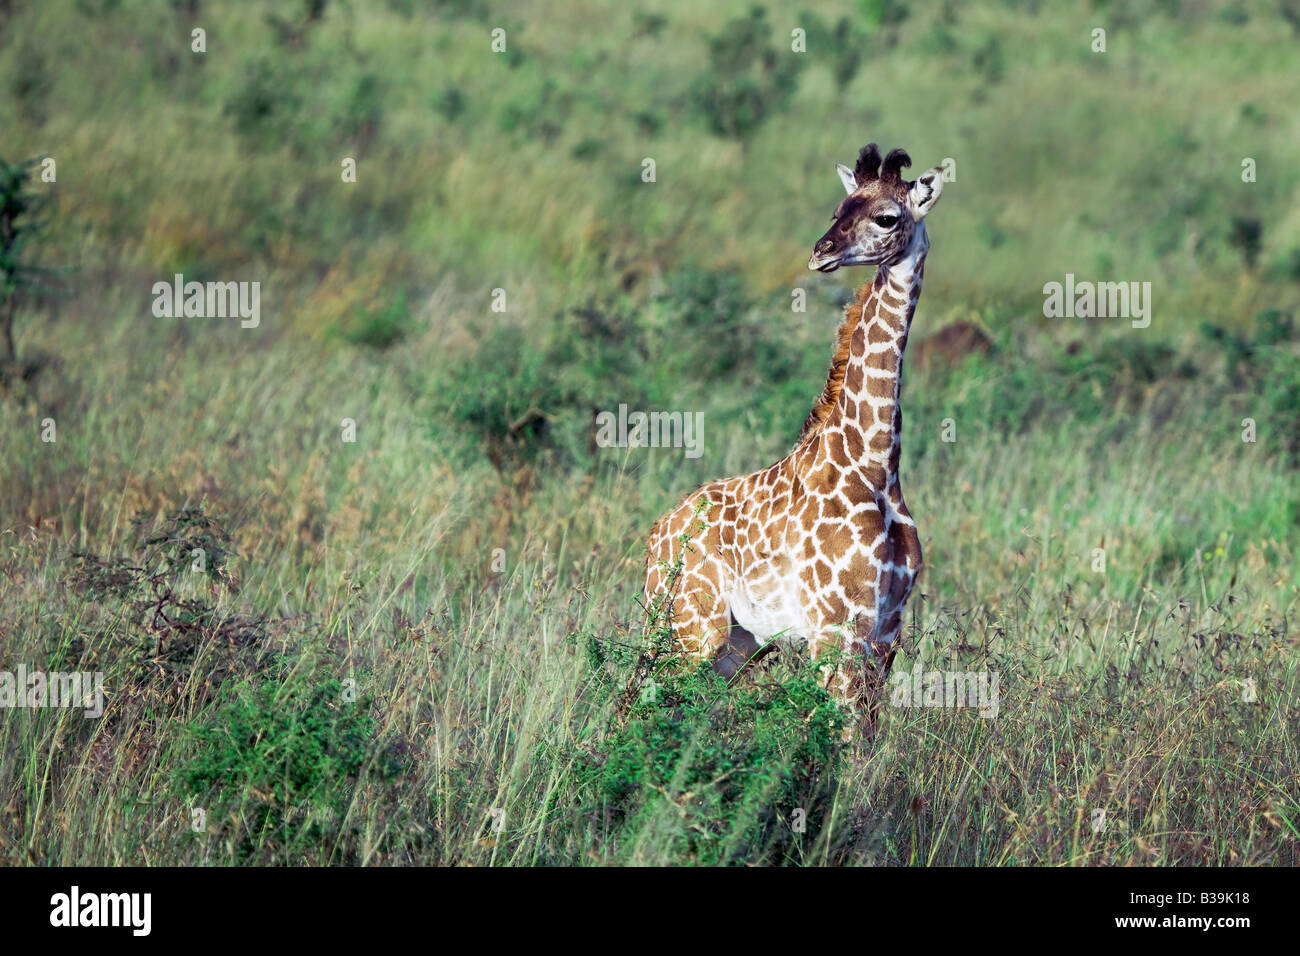 The young giraffe Stock Photo